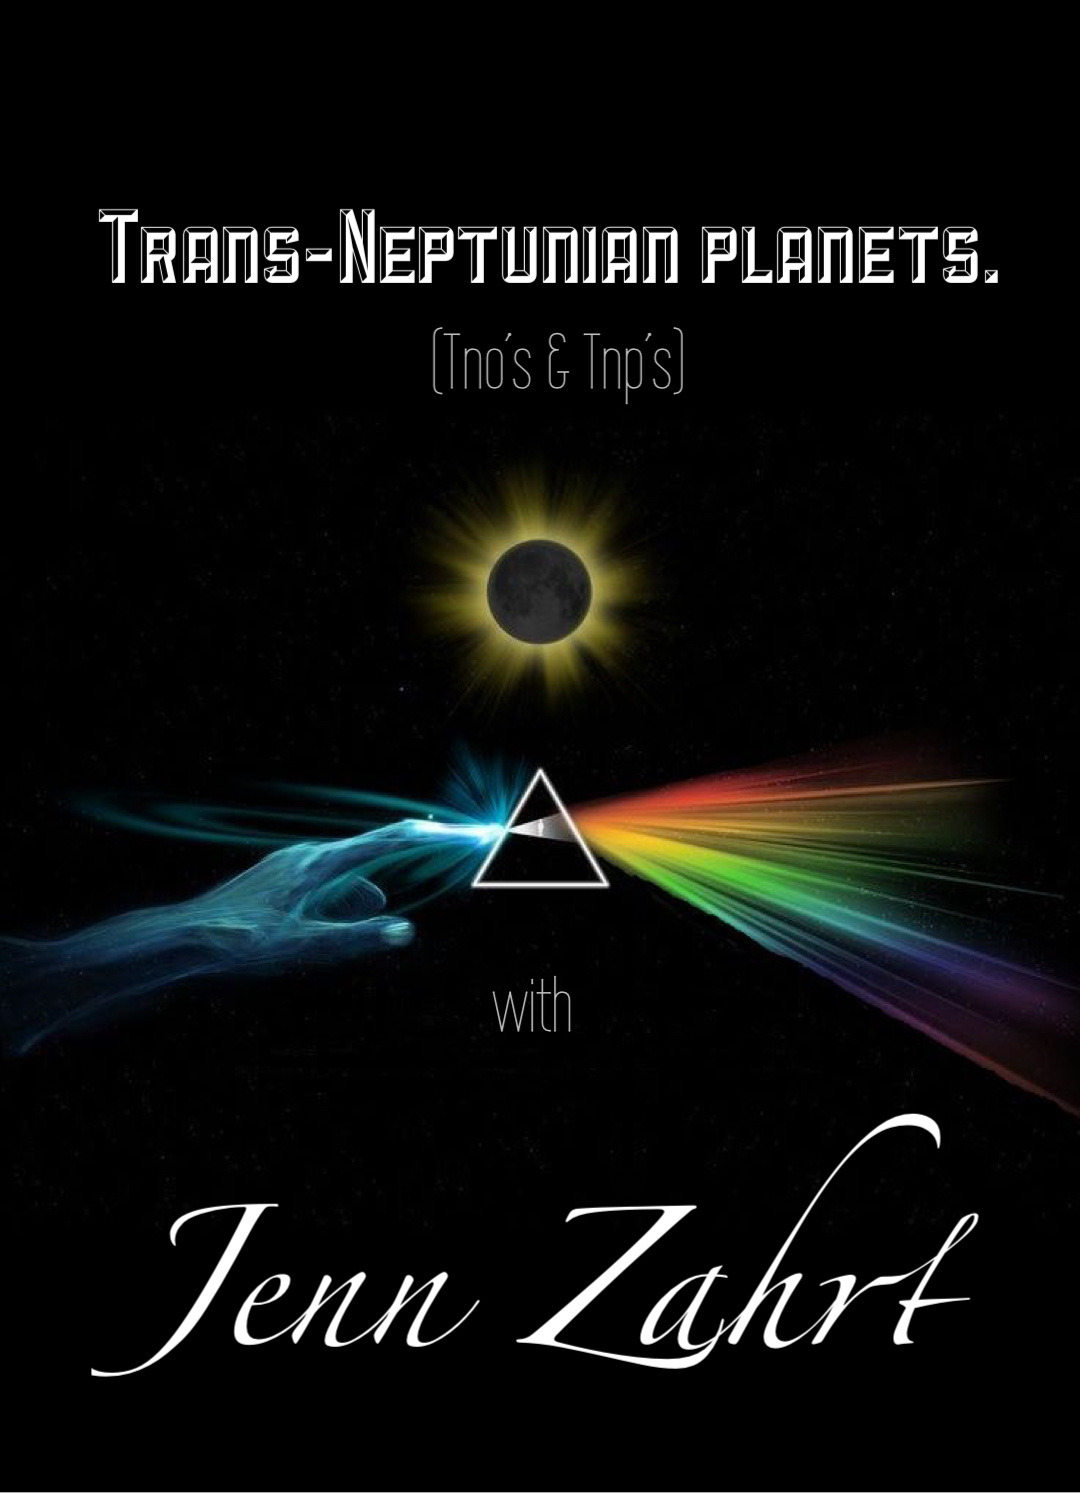 The Trans-Neptunian Planets with Jenn Zahrt